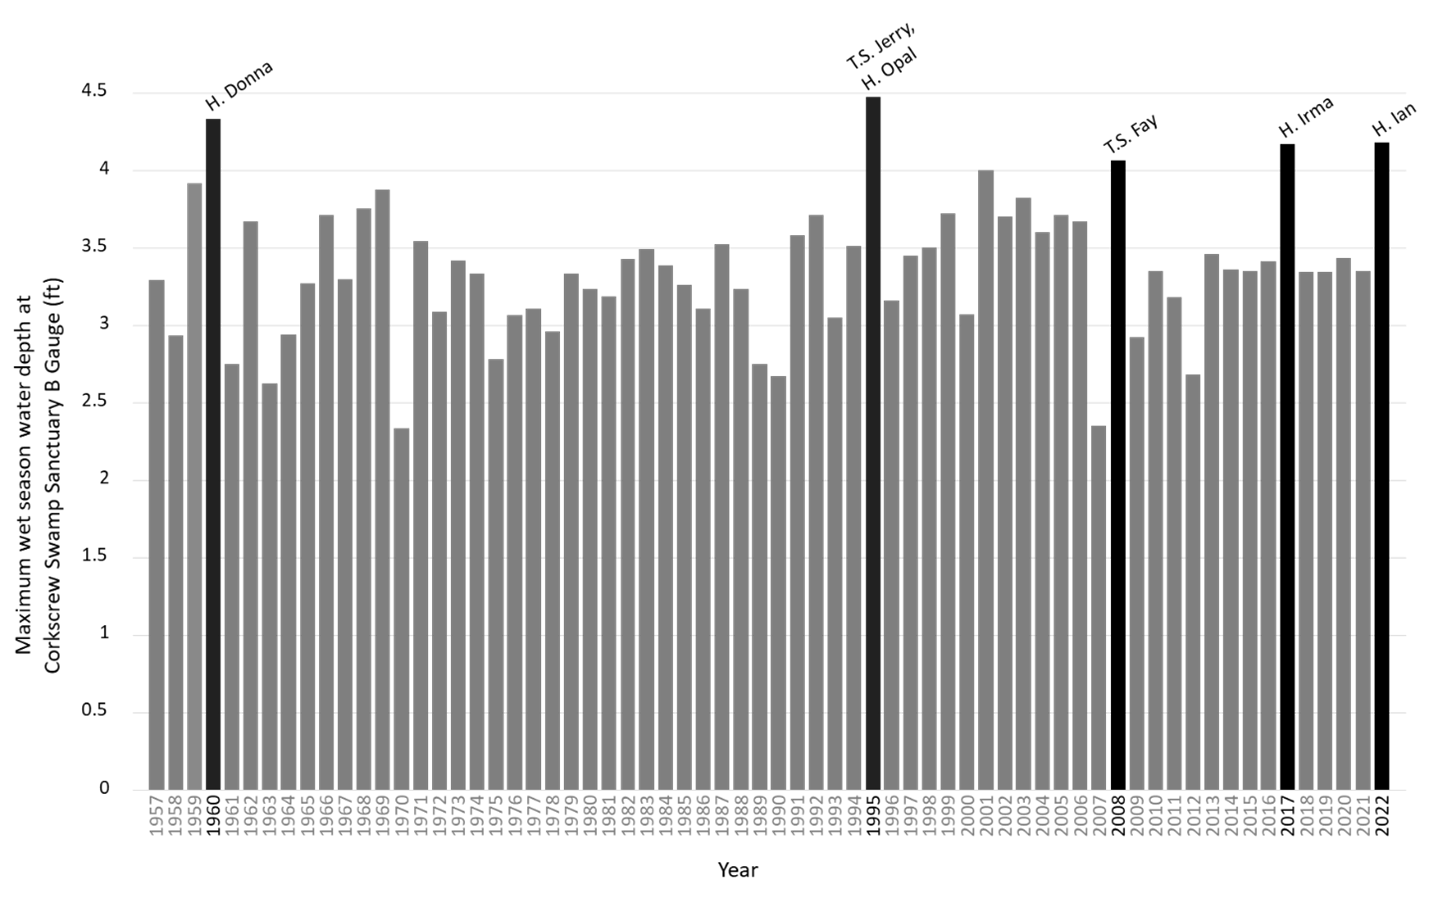 Graph showing September rainfall amounts since 1957.